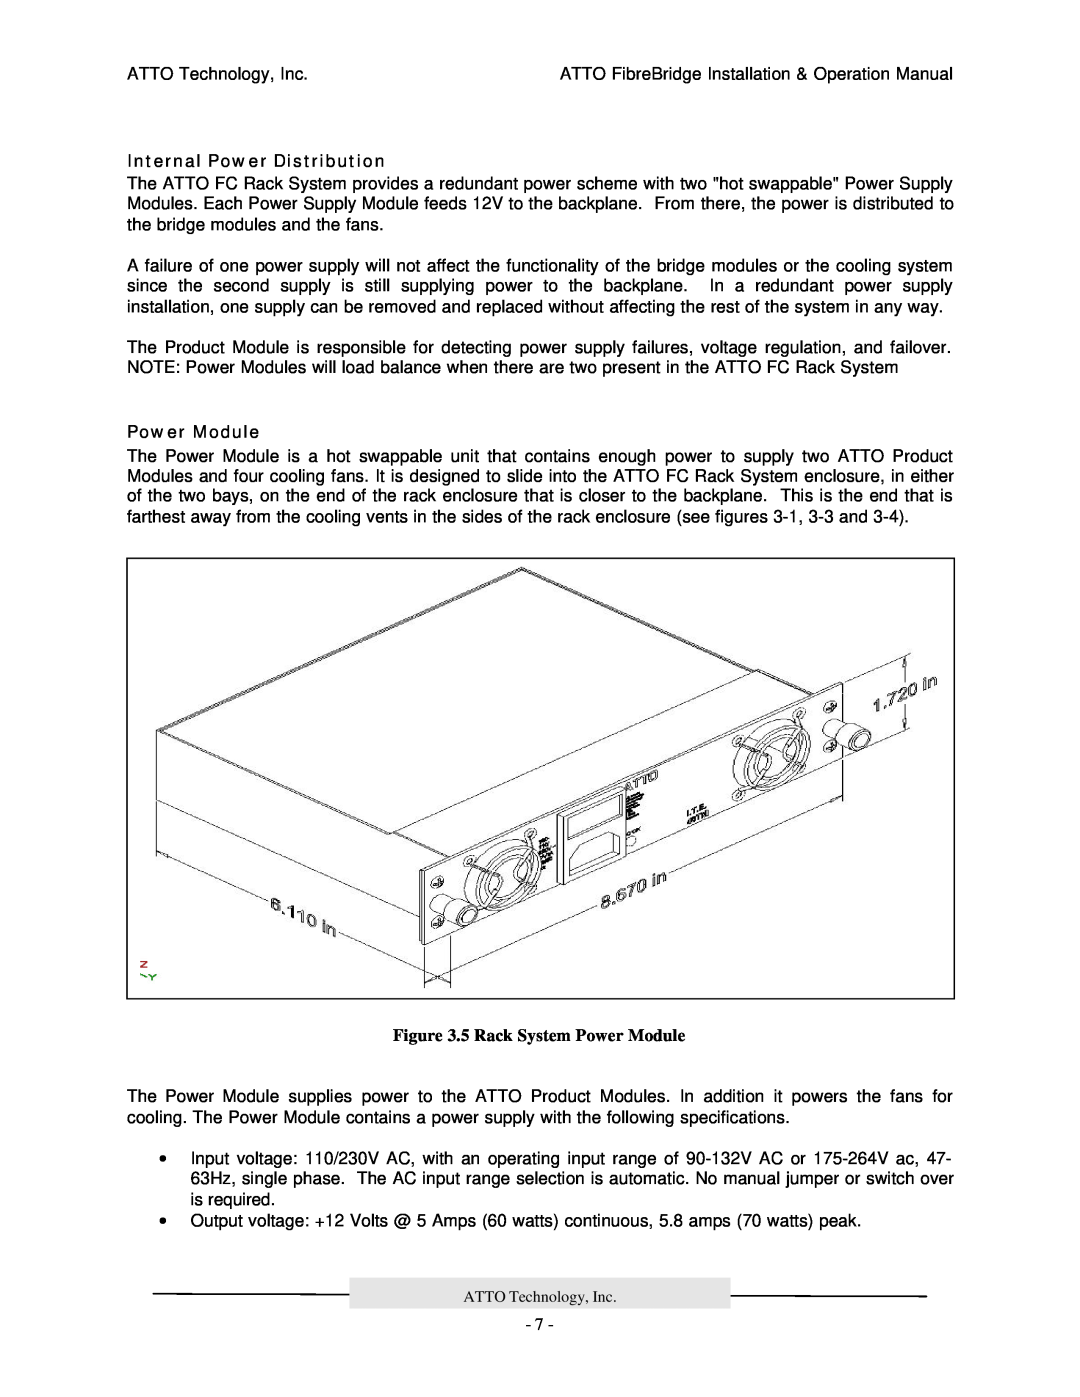 ATTO Technology 2100R, 2200R/D, 3200R manual Internal Power Distribution, 5 Rack System Power Module 